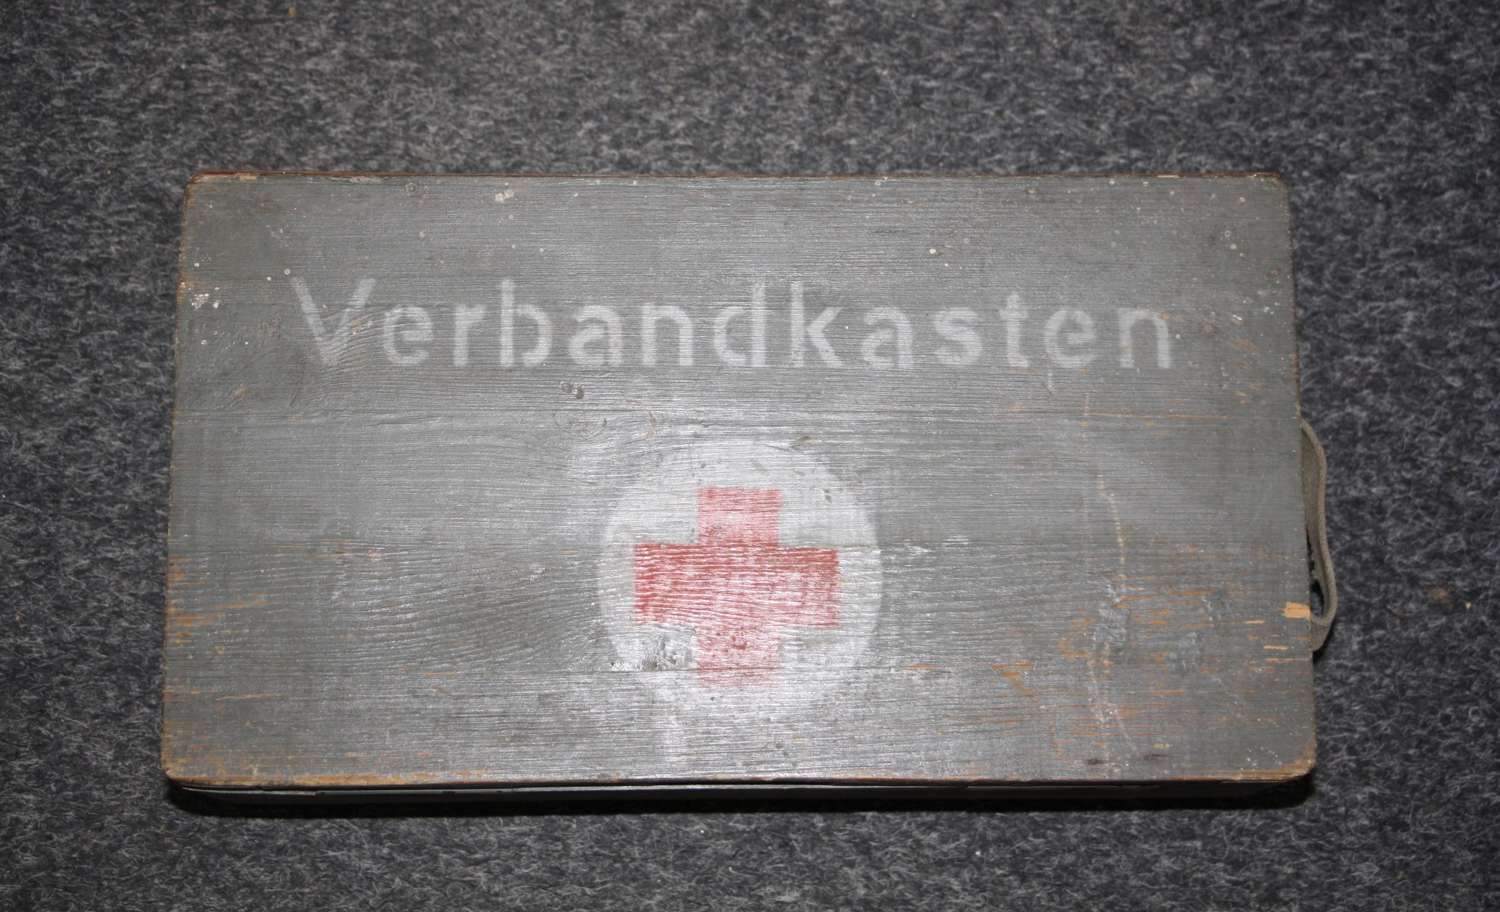 A WW2 German verbandkasten medical box . With vehicle number etc.